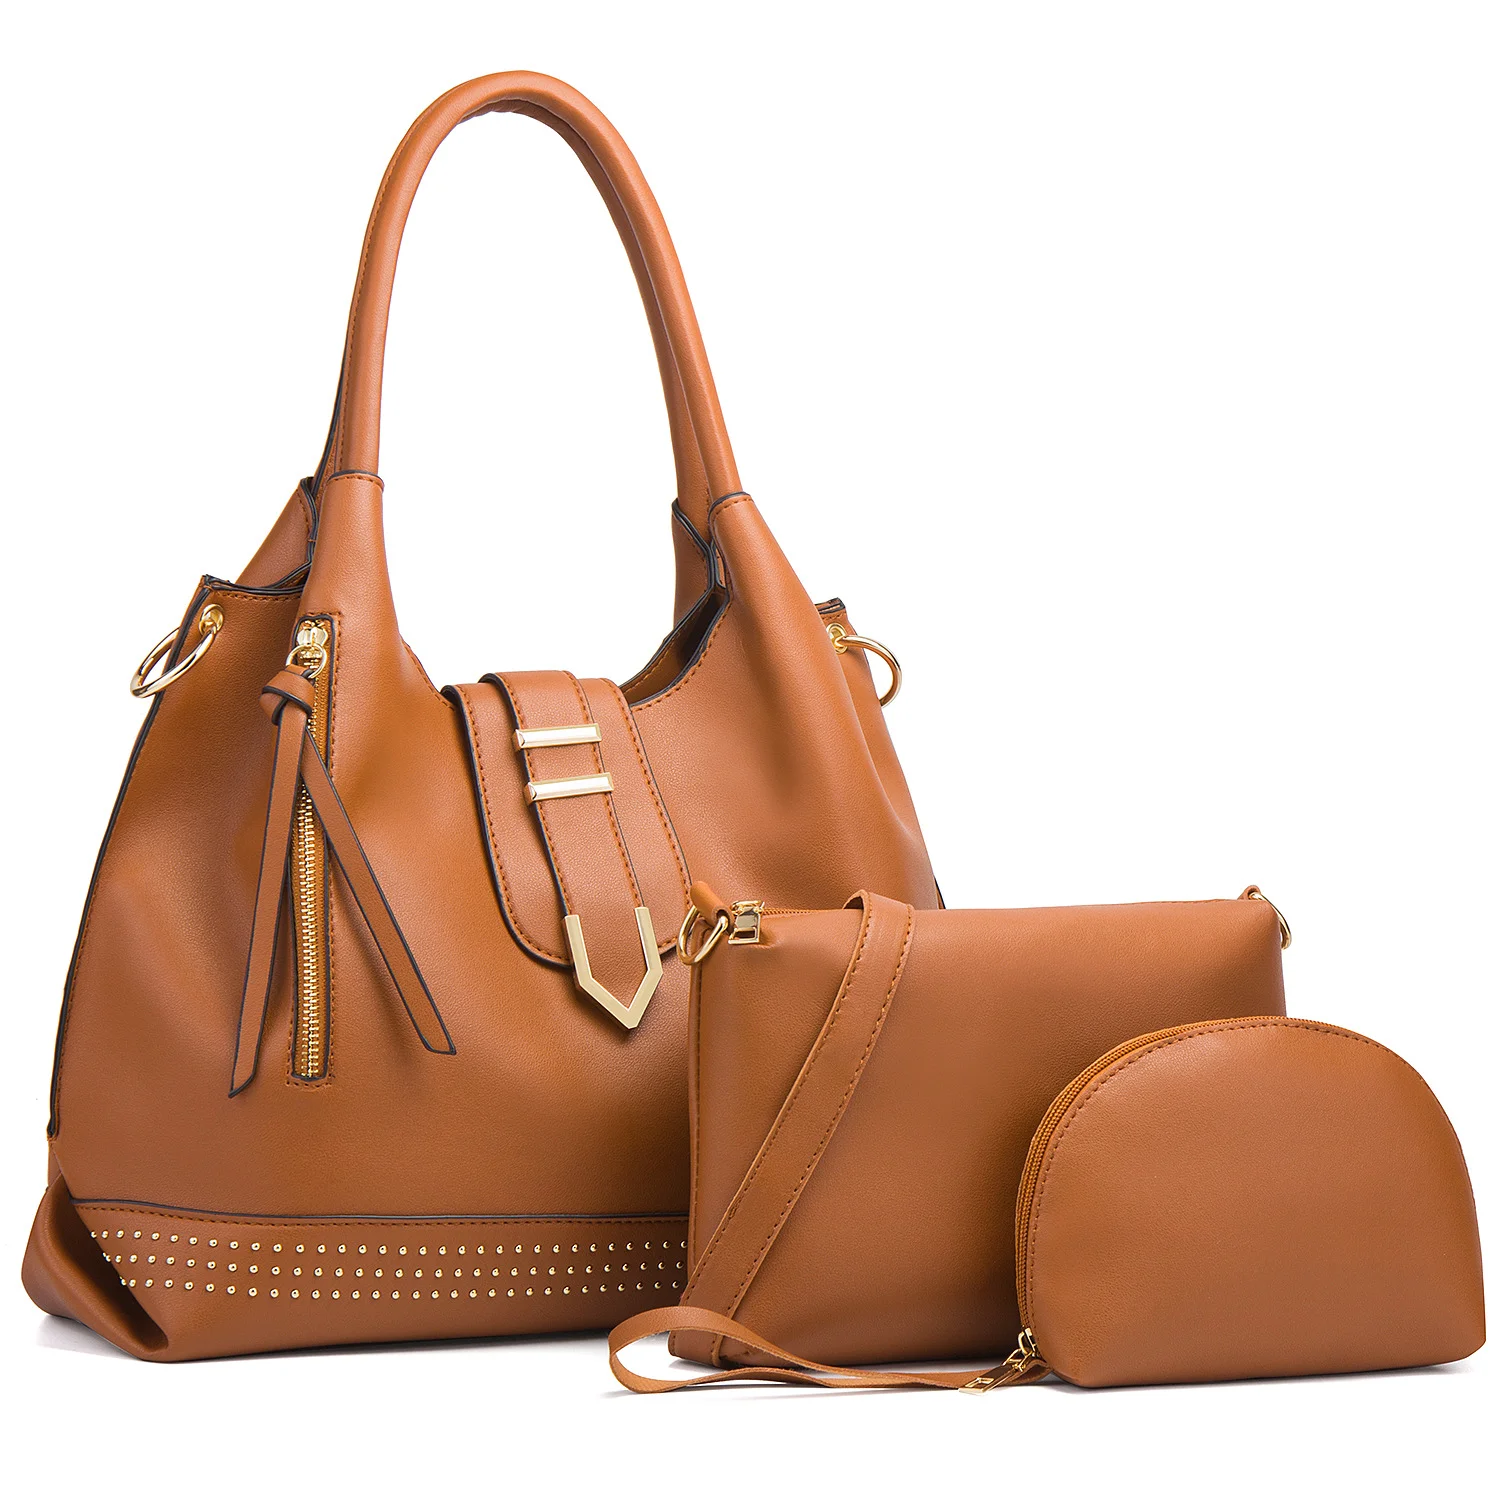 

FUNMARDI New Fashion Rivet 3 Pieces Set HandBag Luxury Designer PU Leather Shoulder Bag High Capacity Women Solid Color Tote Bag